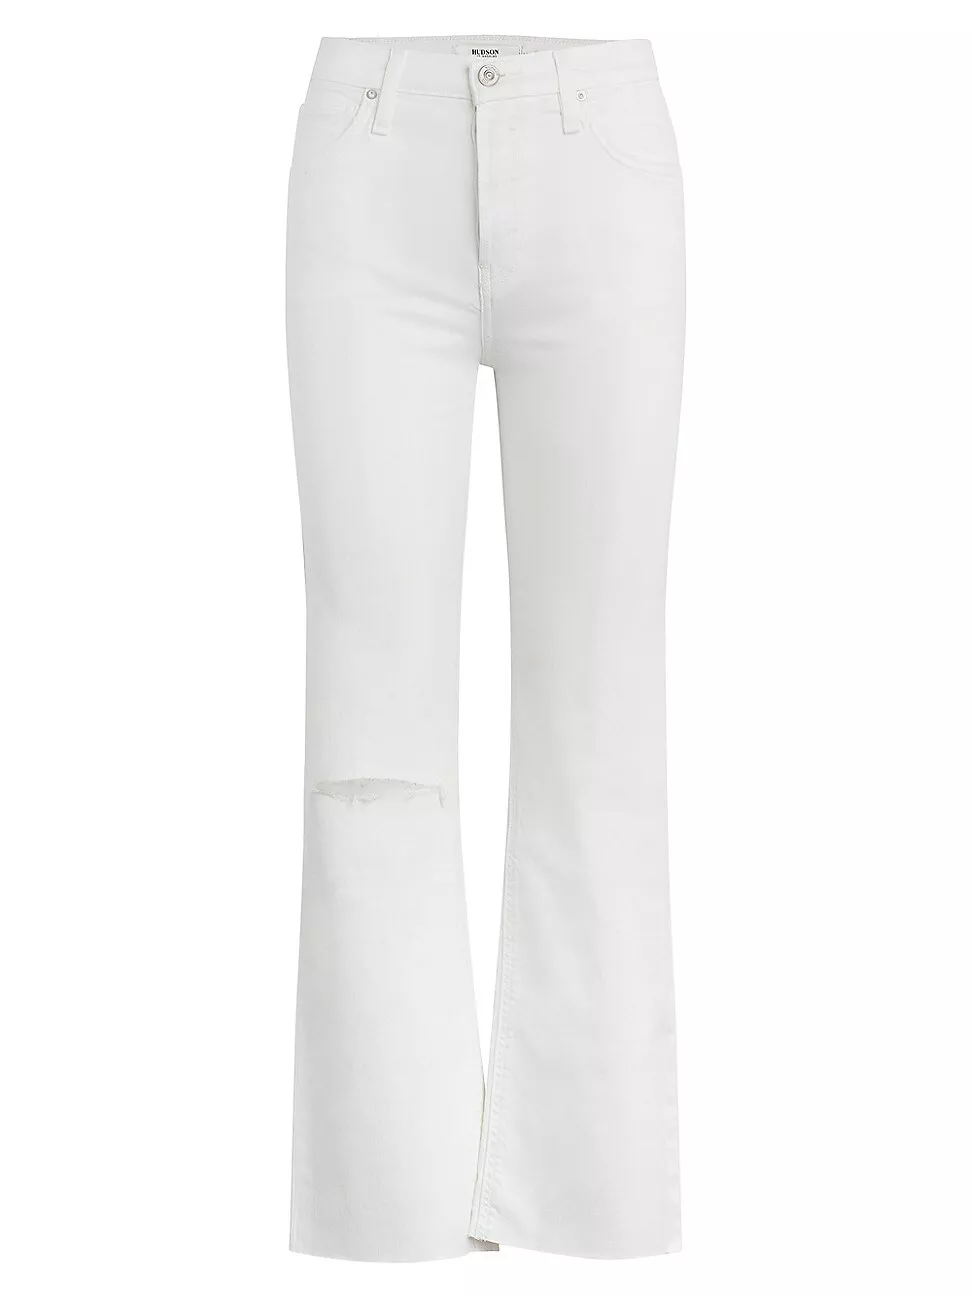 Ayla Linen Pants White Tall